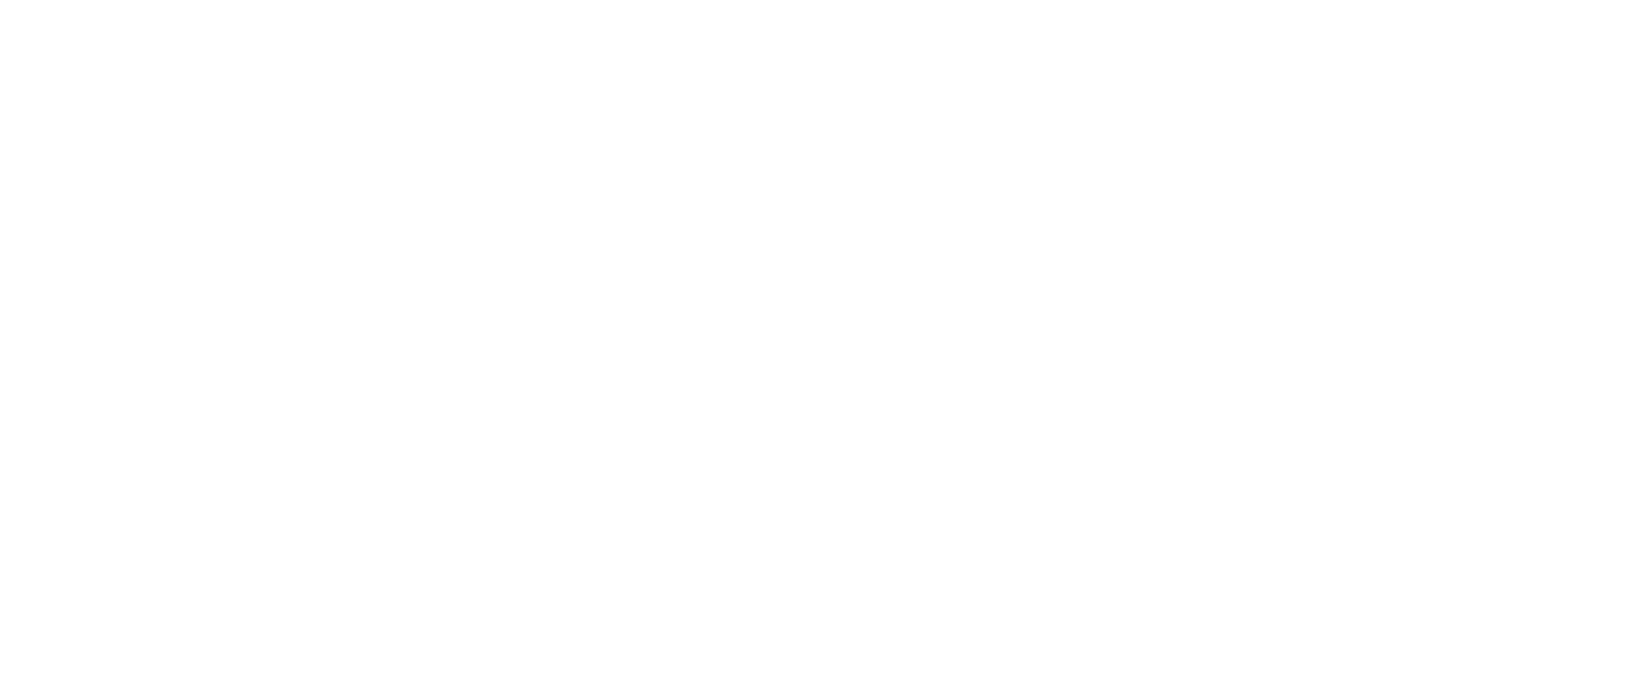 Kosmicks logo